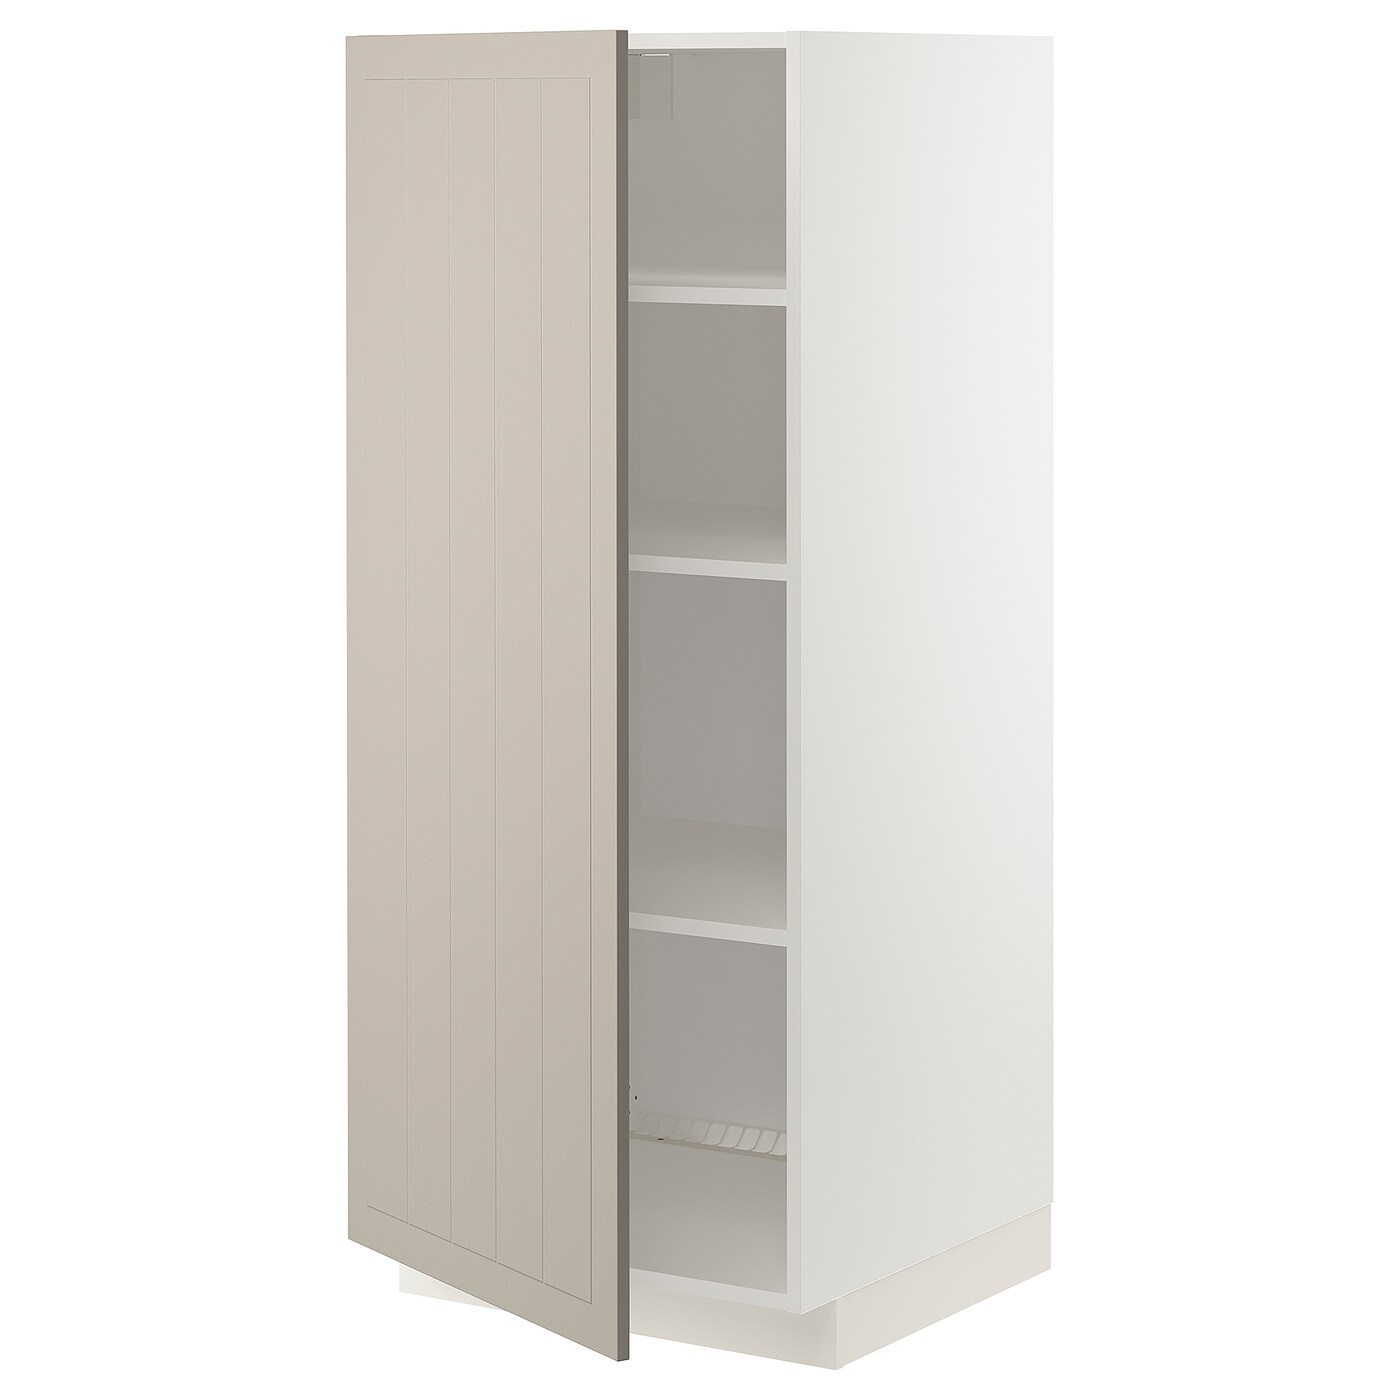 Высокий кухонный шкаф с полками - IKEA METOD/МЕТОД ИКЕА, 140х60х60 см, белый/бежевый